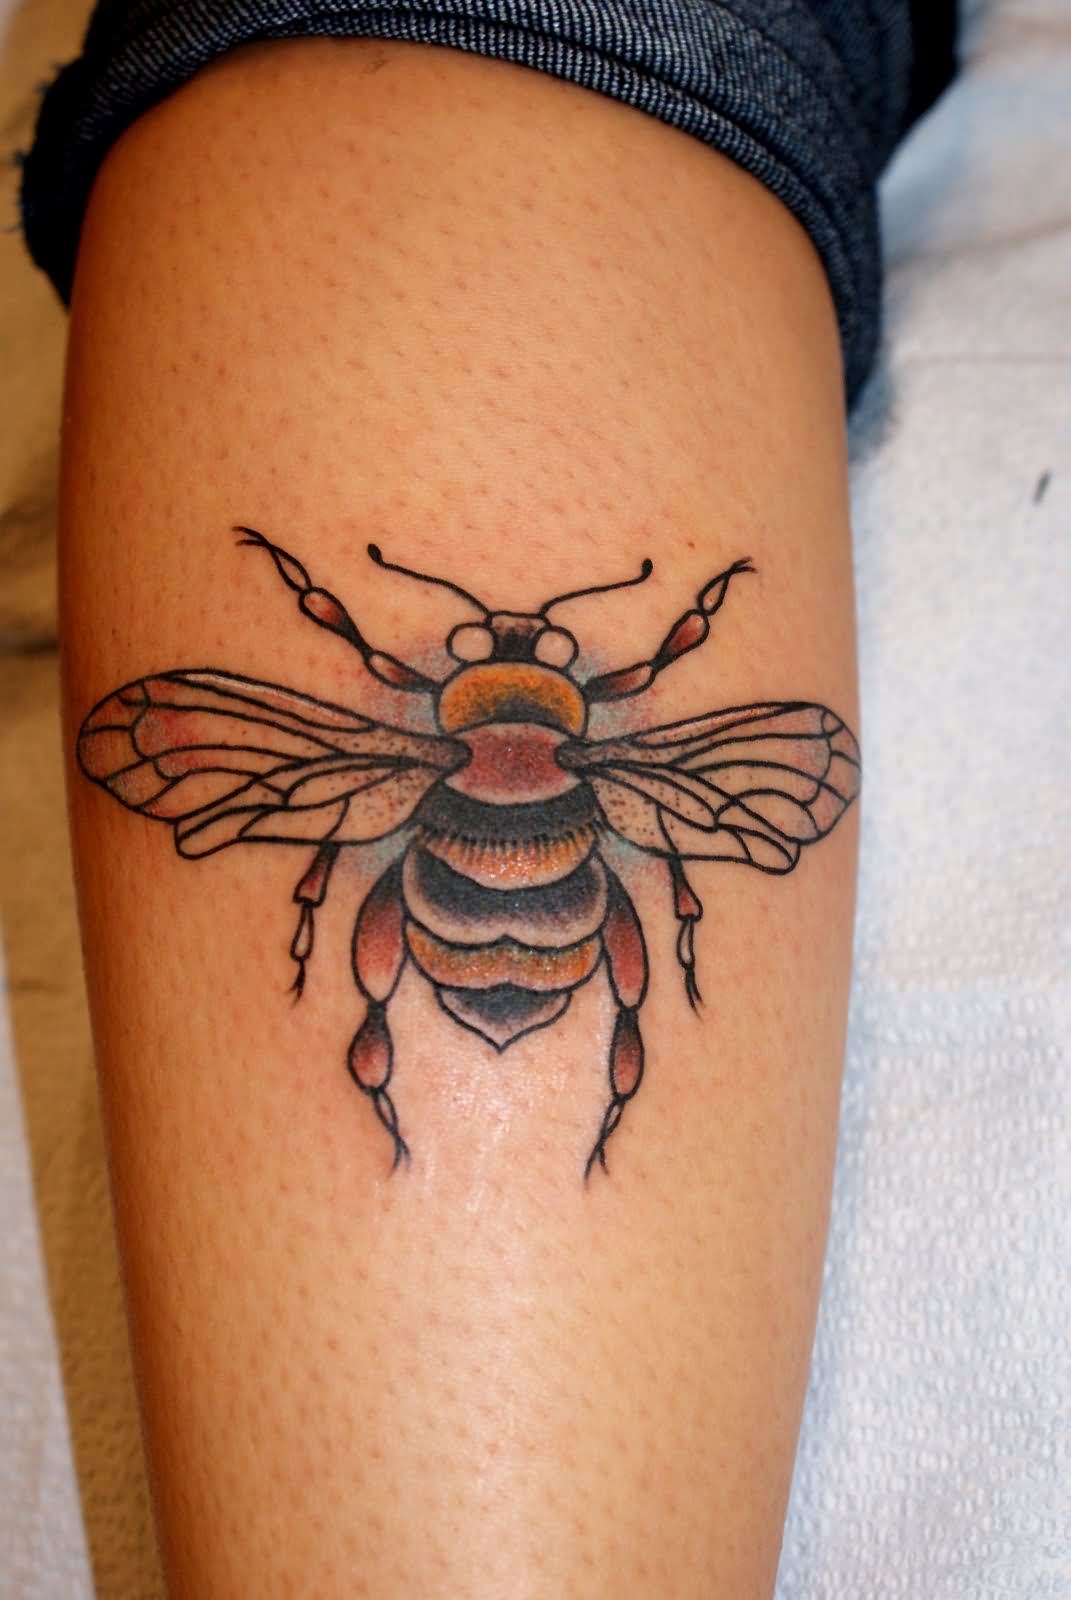 Fantastic Bee Tattoo Design For Leg